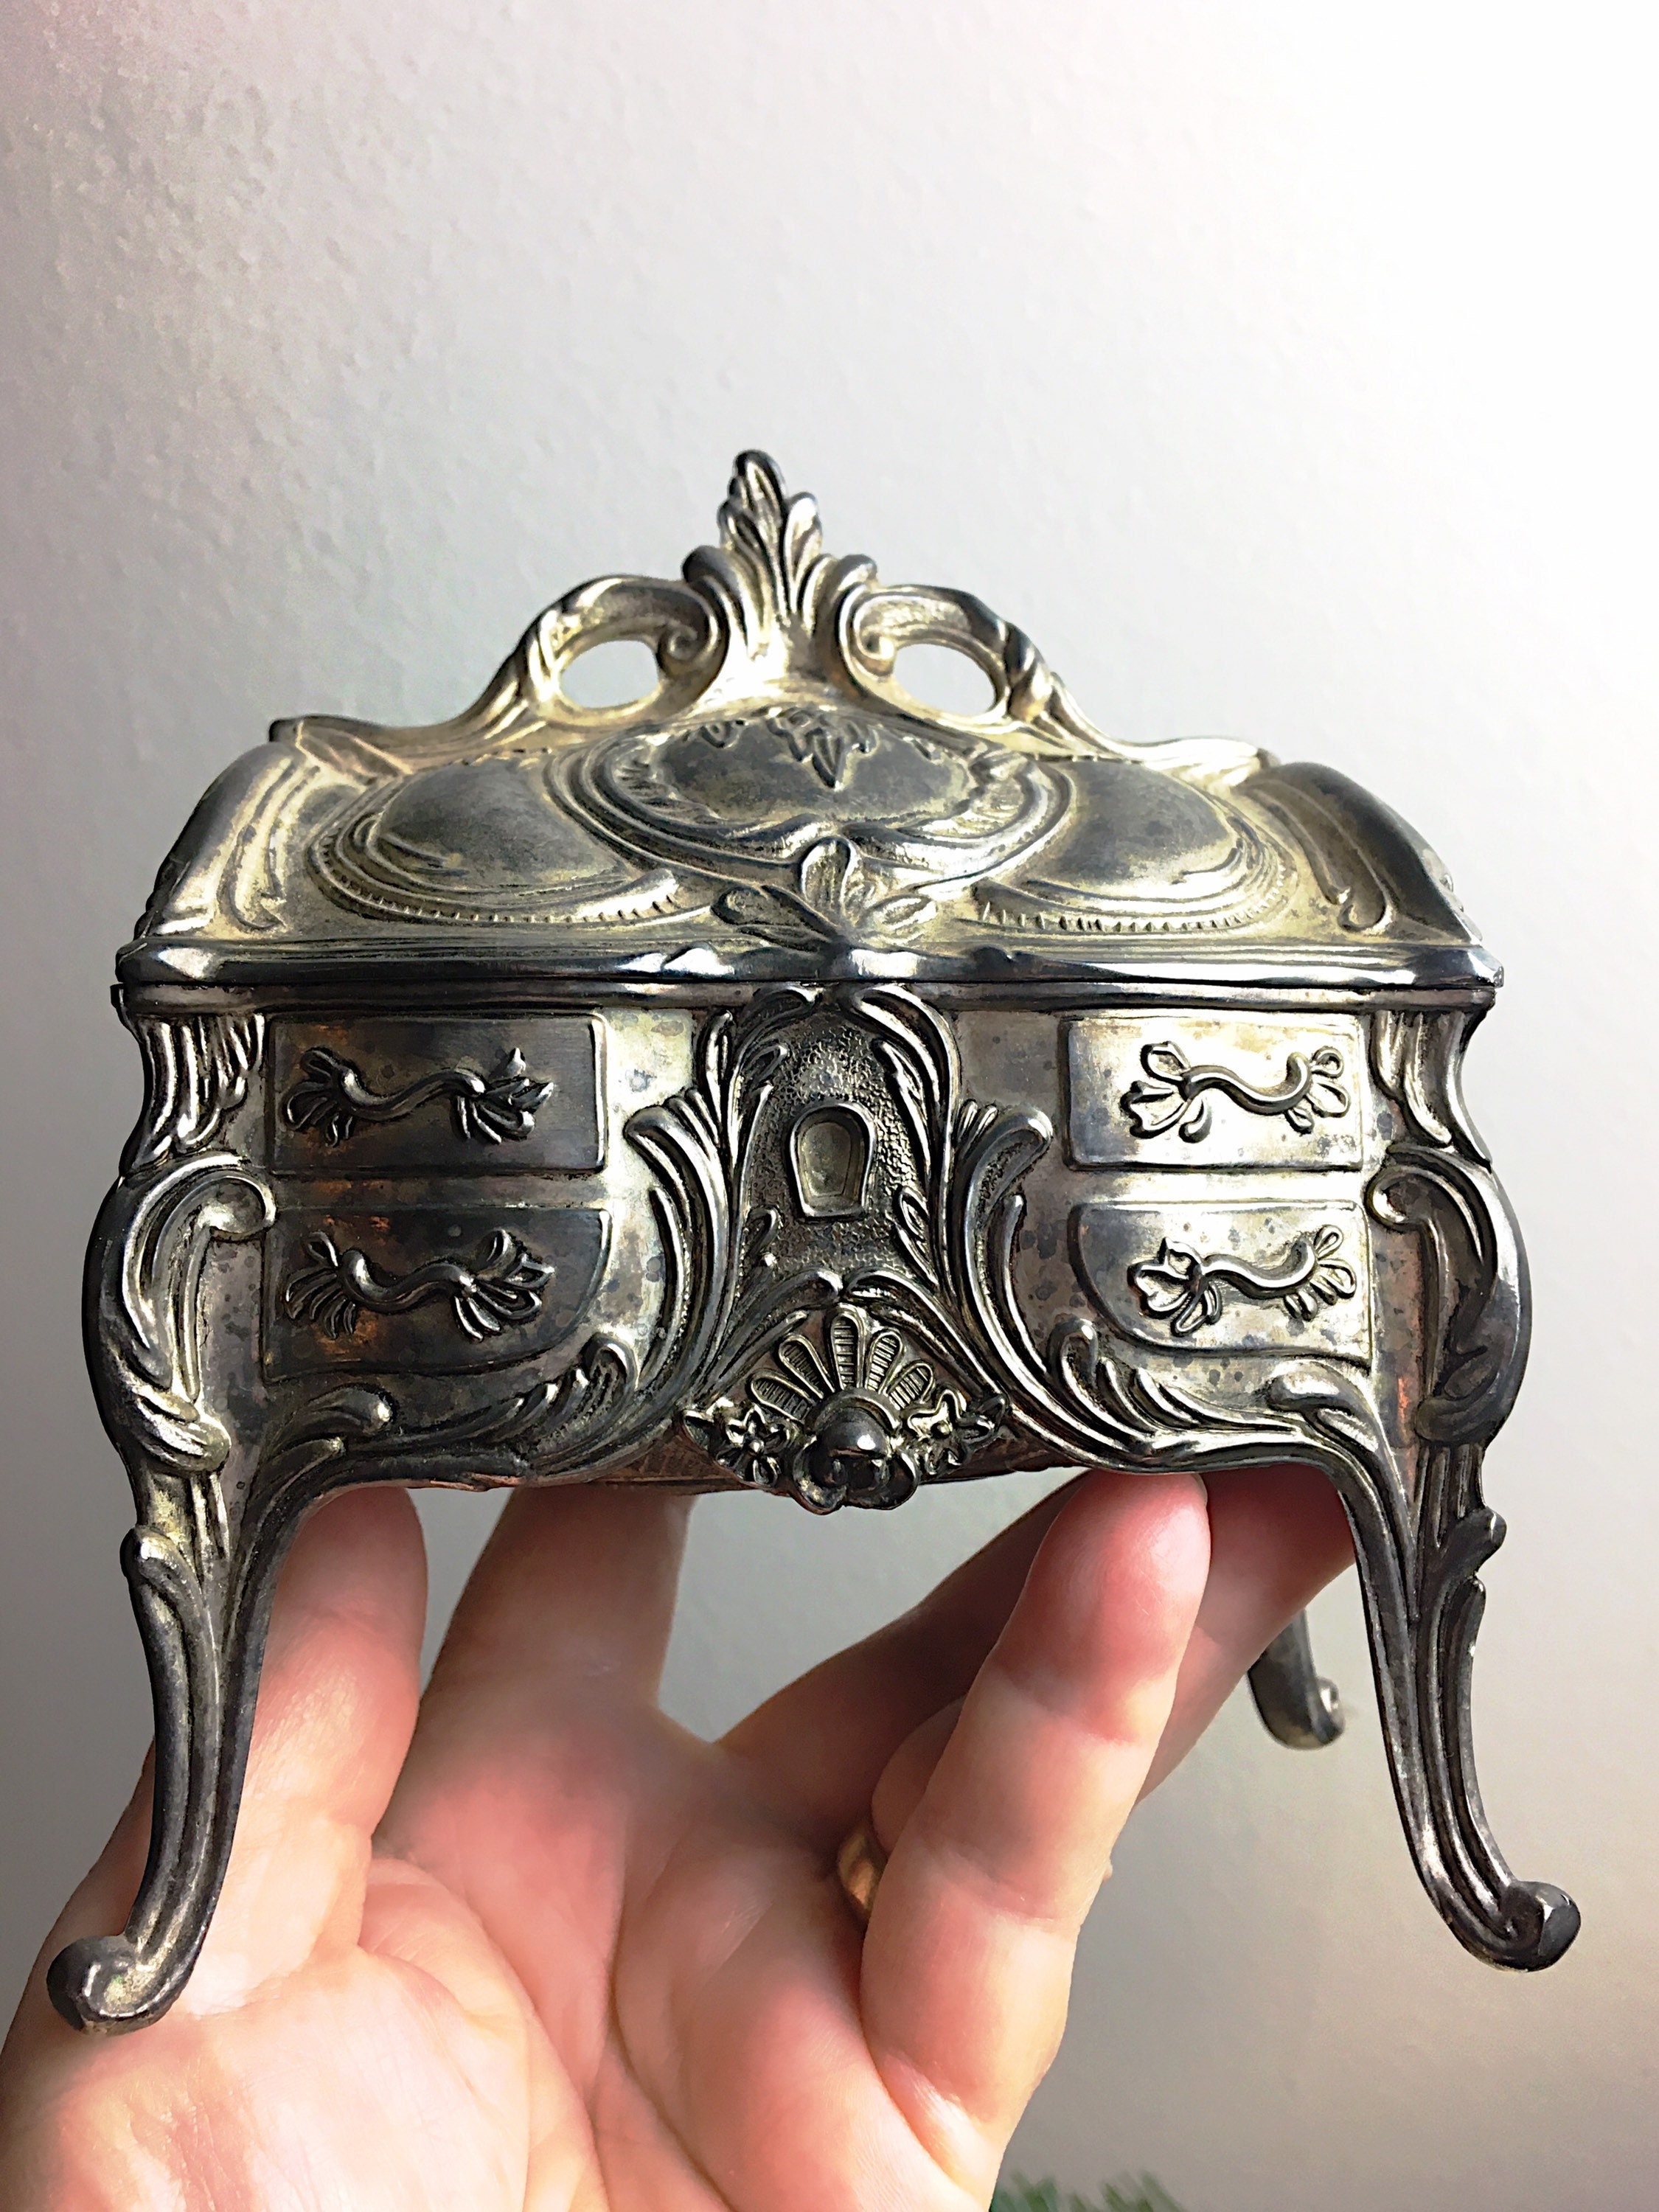 6pc antique silver finish metal alloy jewelry box pendant-3359 